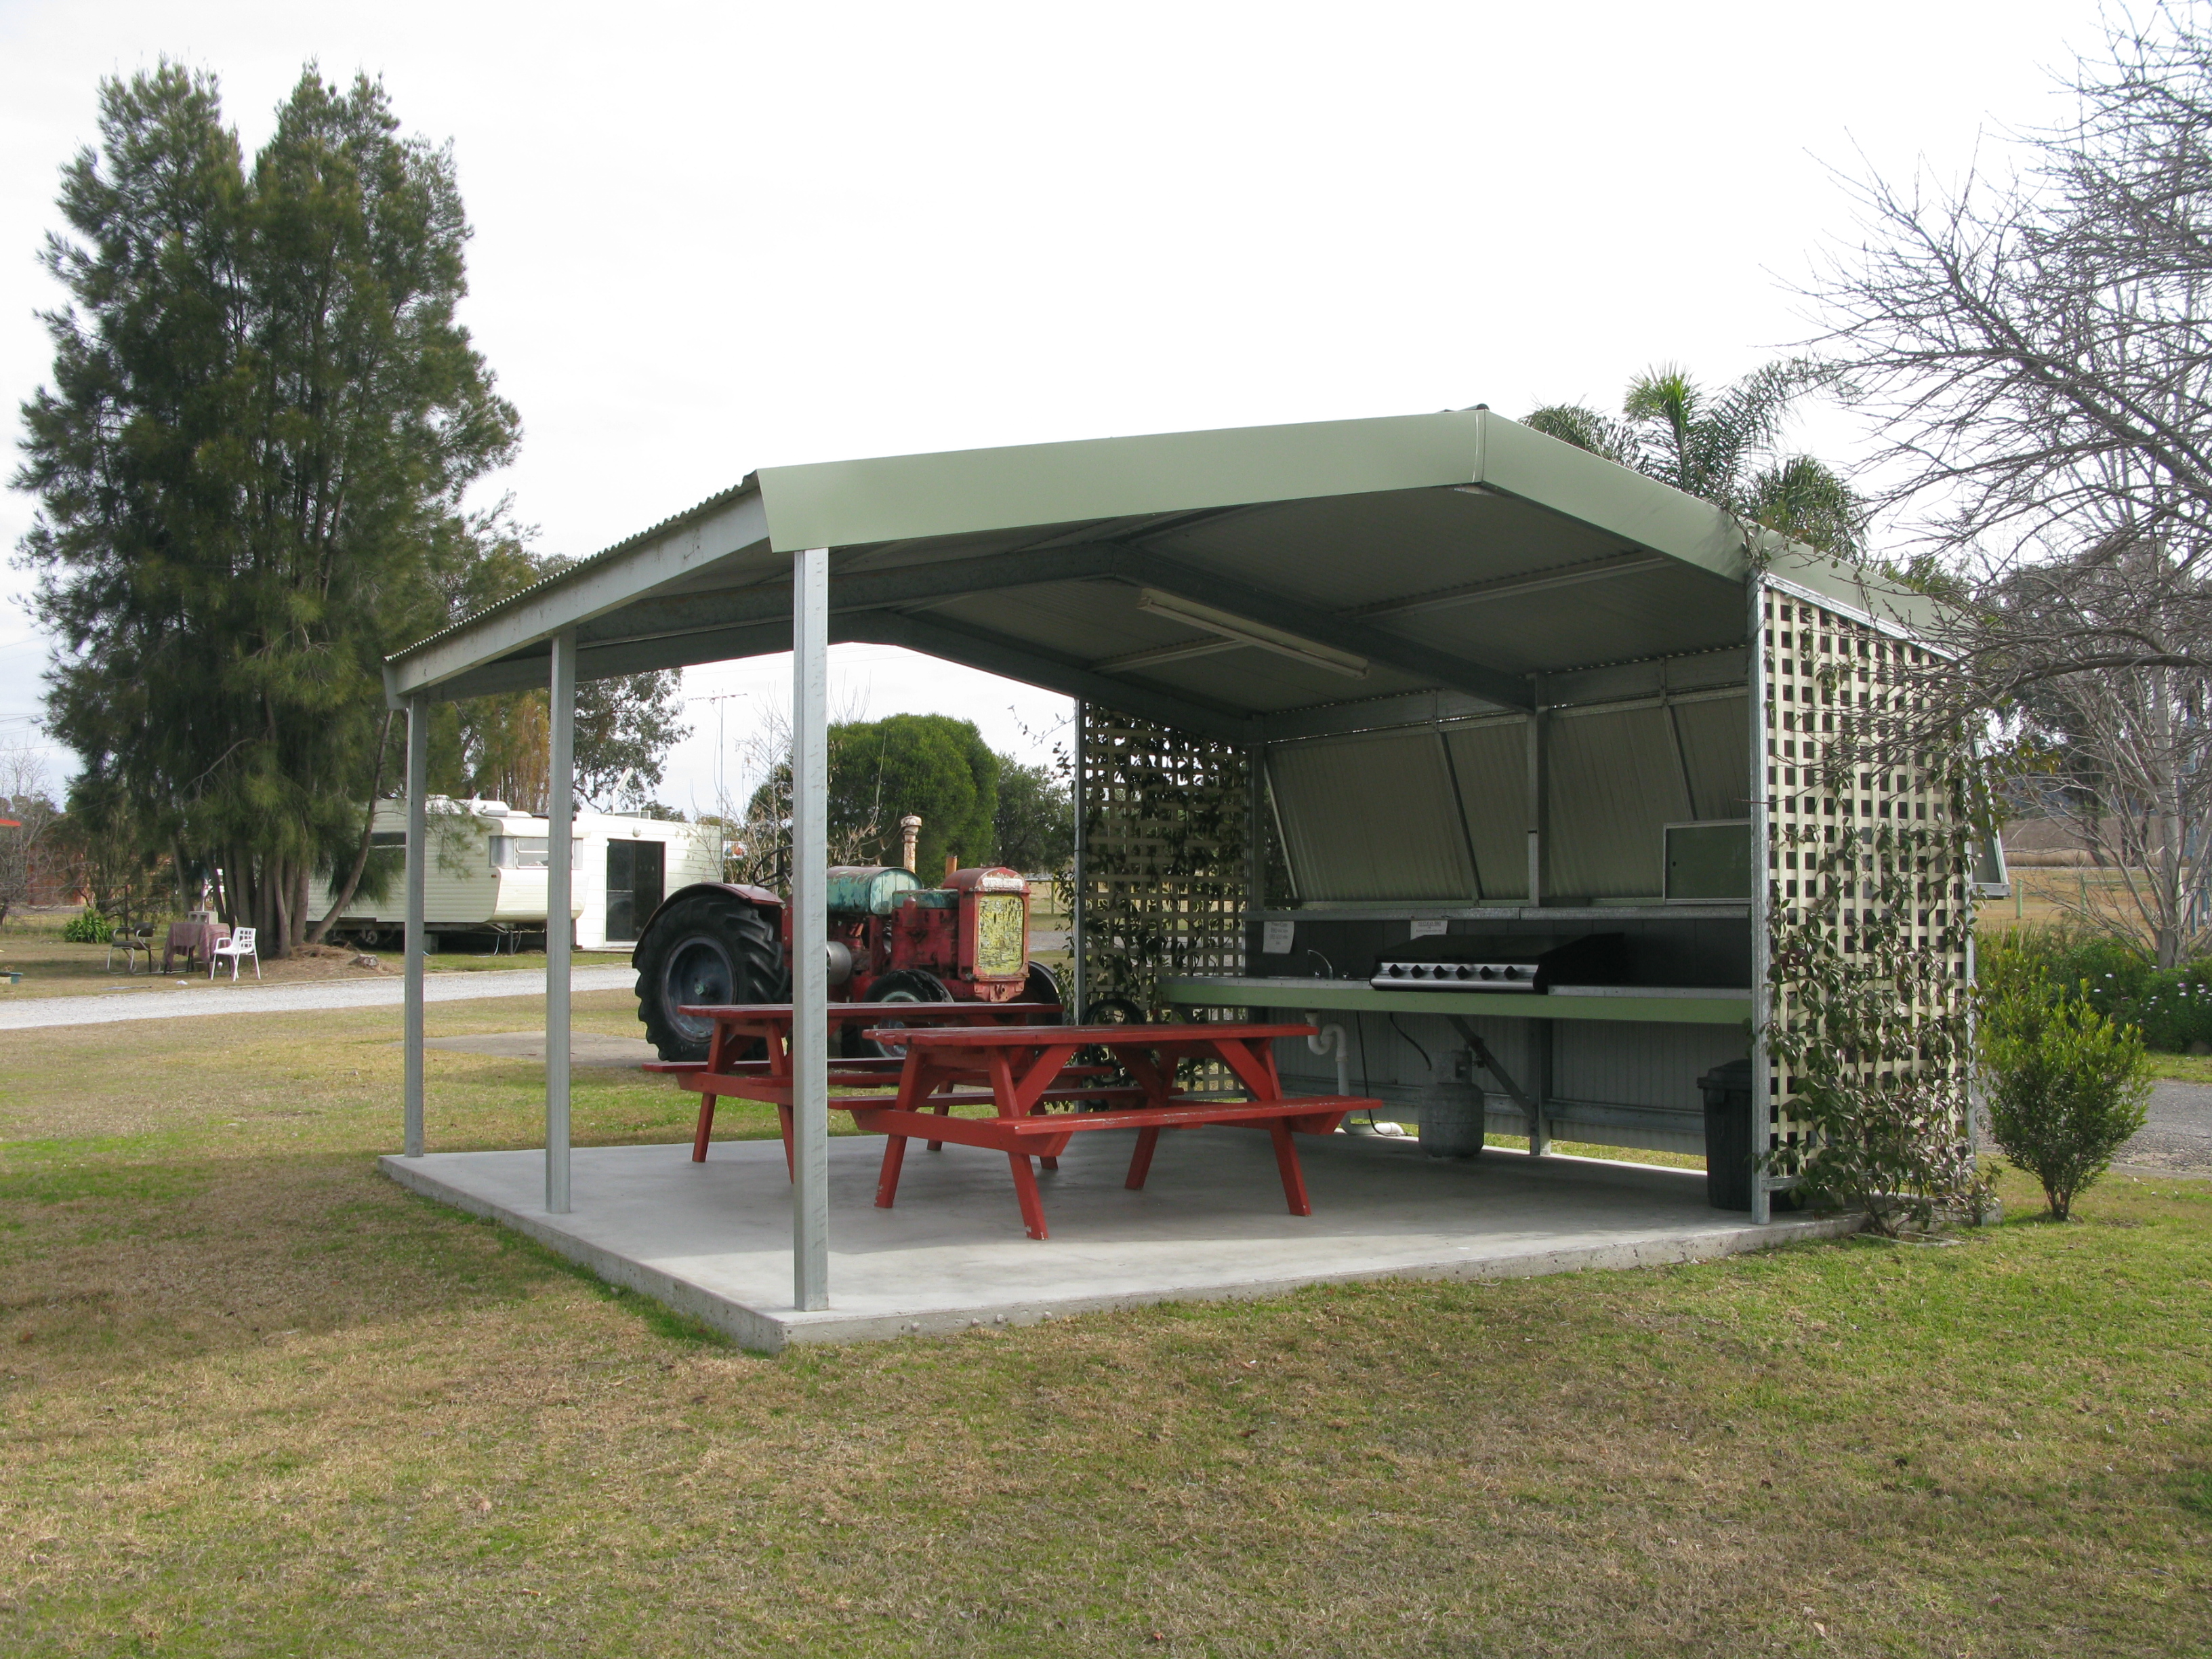 Kootingal Kourt Caravan Park - Kootingal: Camp kitchen and BBQ area